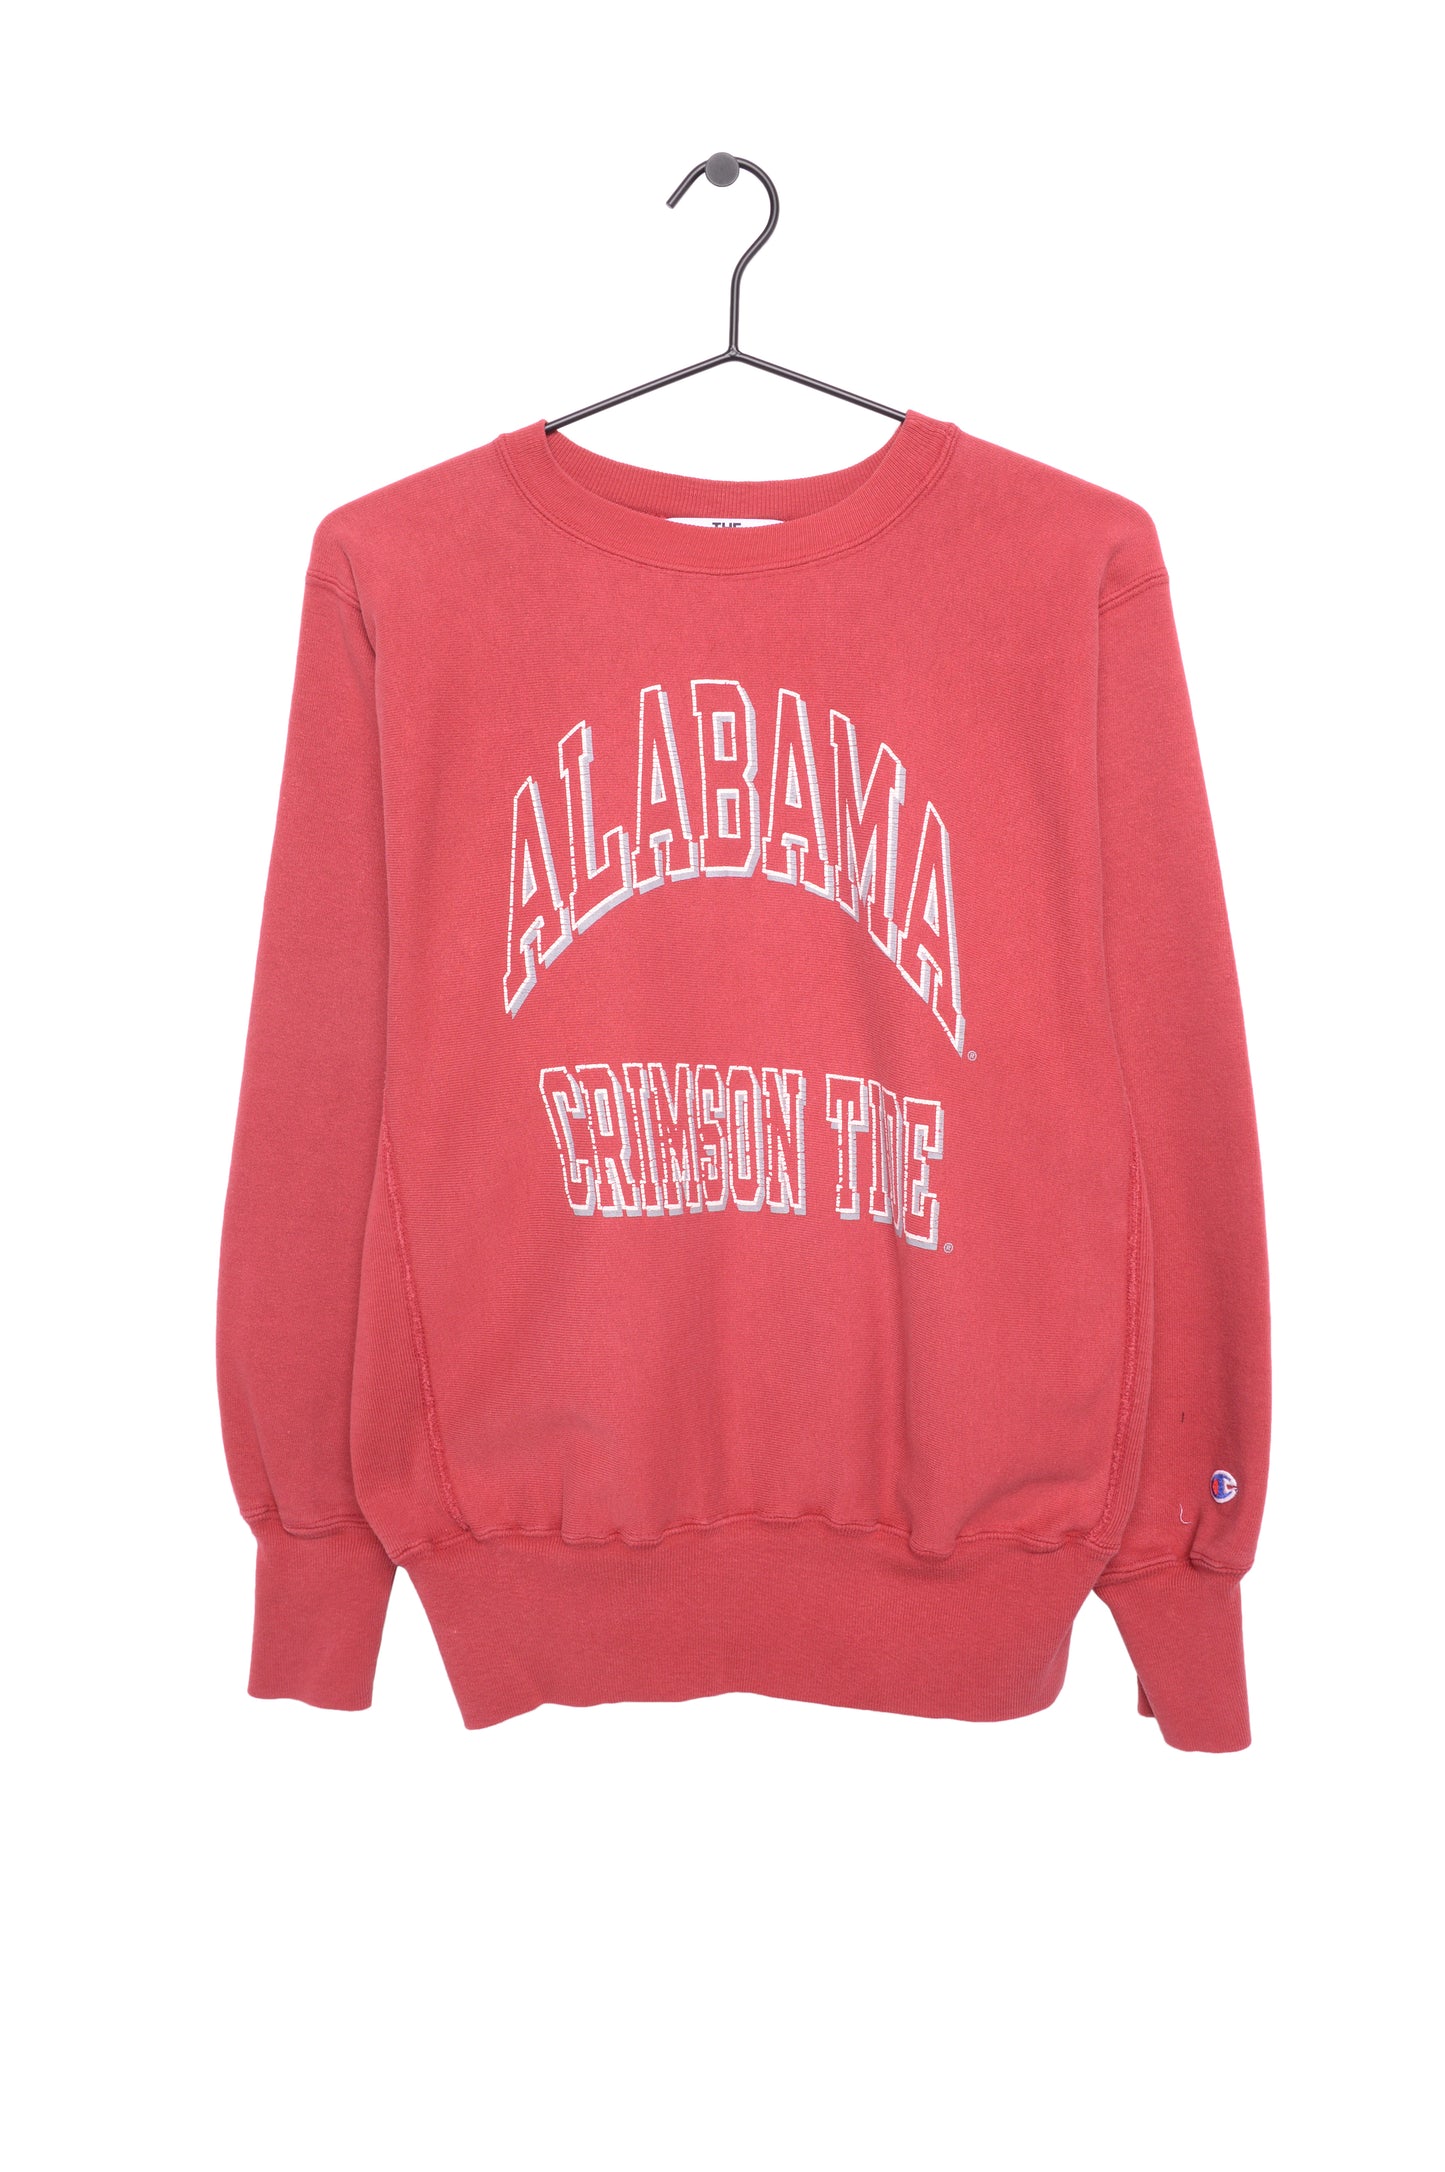 Champion University of Alabama Sweatshirt